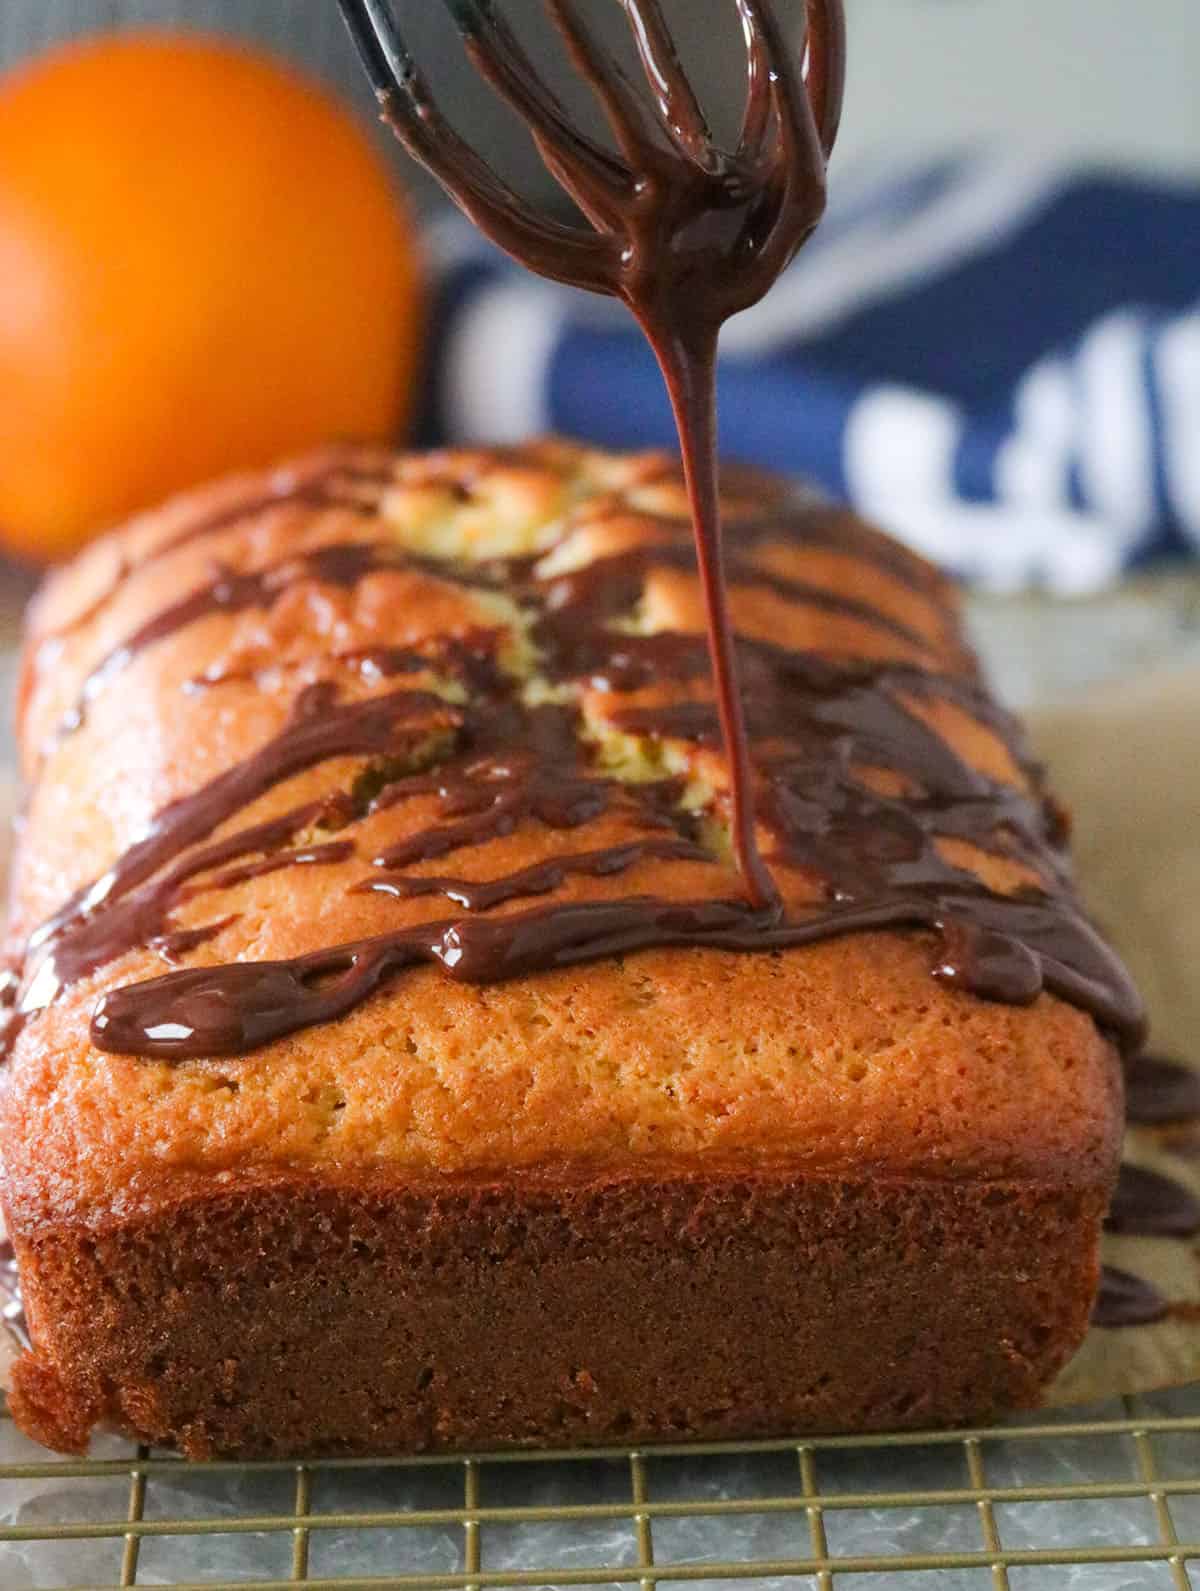 Pouring Orange Chocolate glaze to the cake.